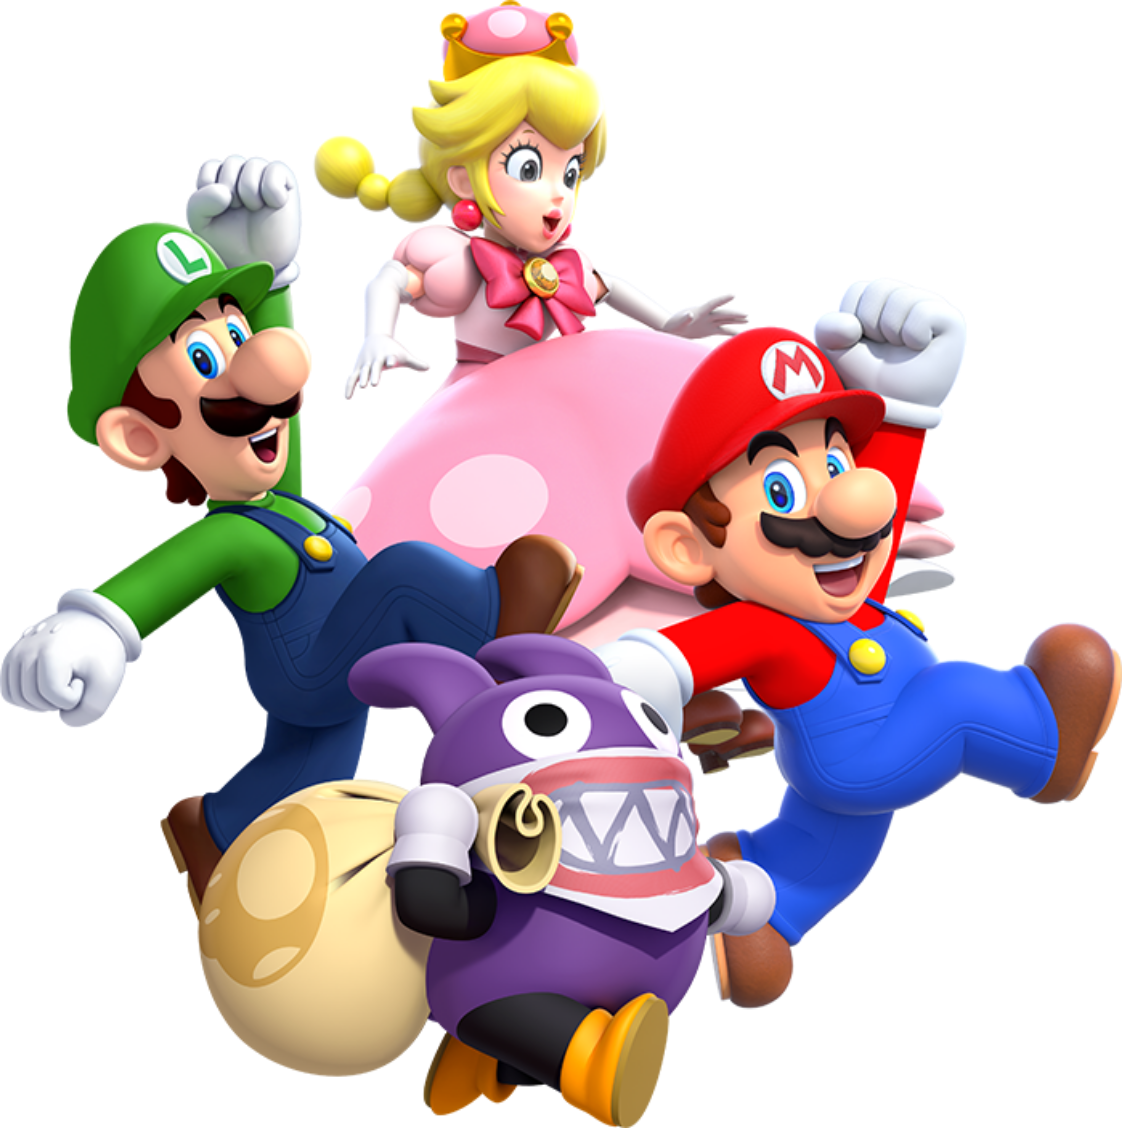 New Super Mario Bros.™ U Deluxe for Nintendo Switch - Nintendo